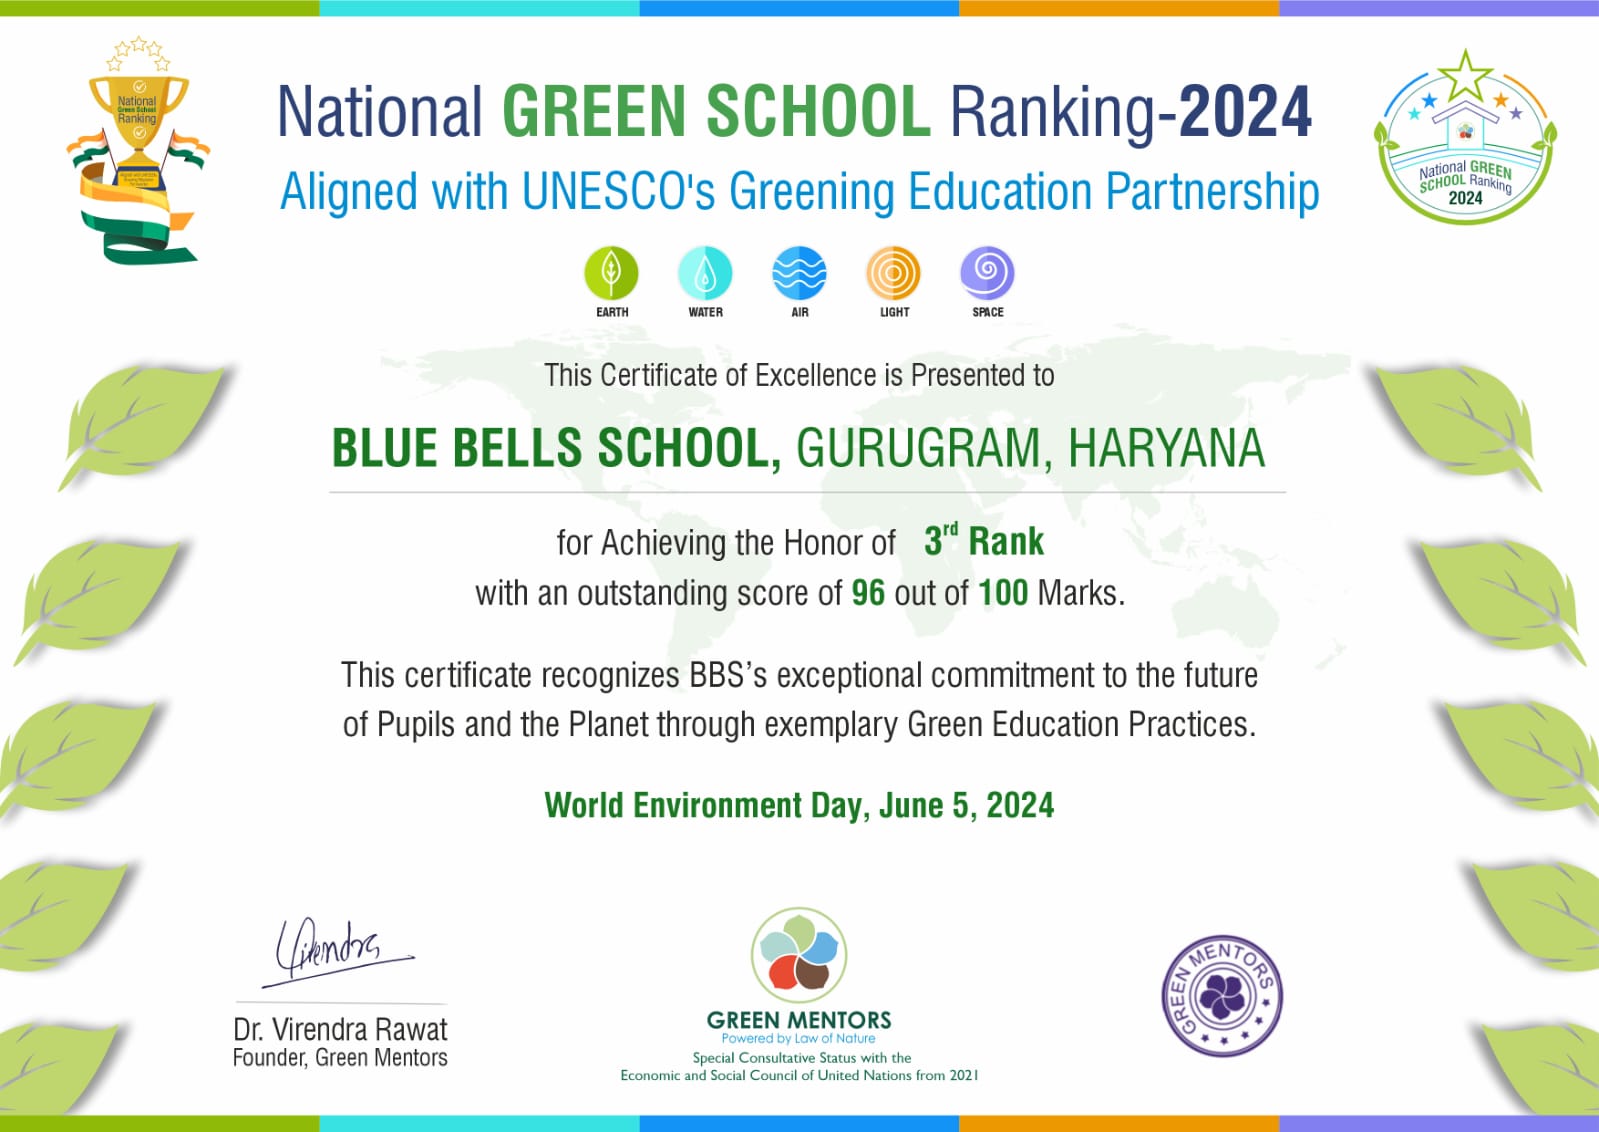 NATIONAL GREEN SCHOOL RANKING 2024 